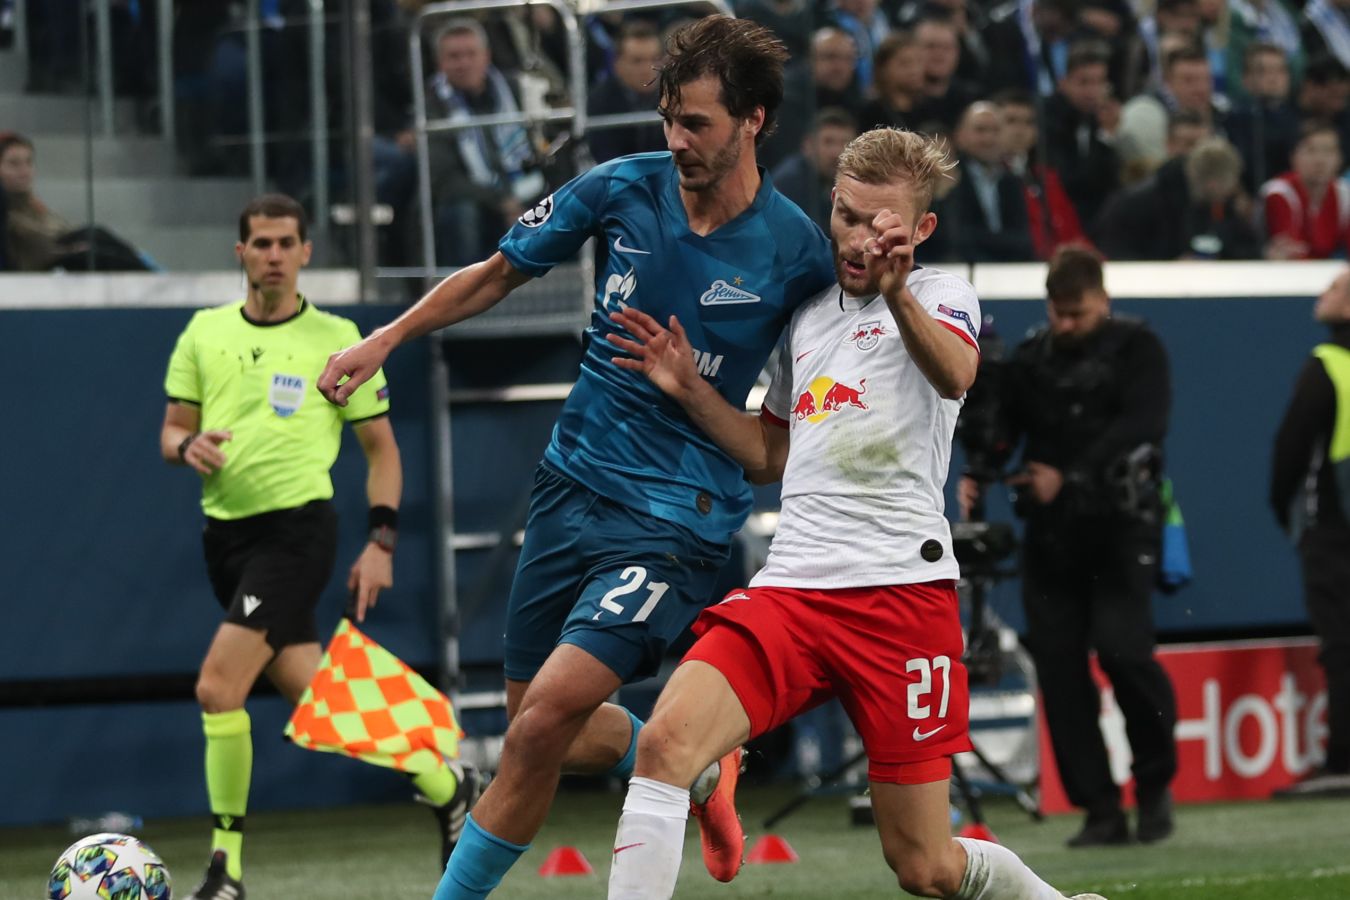 «Бавария» заключила контракт с полузащитником «РБ Лейпциг» Лаймером — Sky Germany